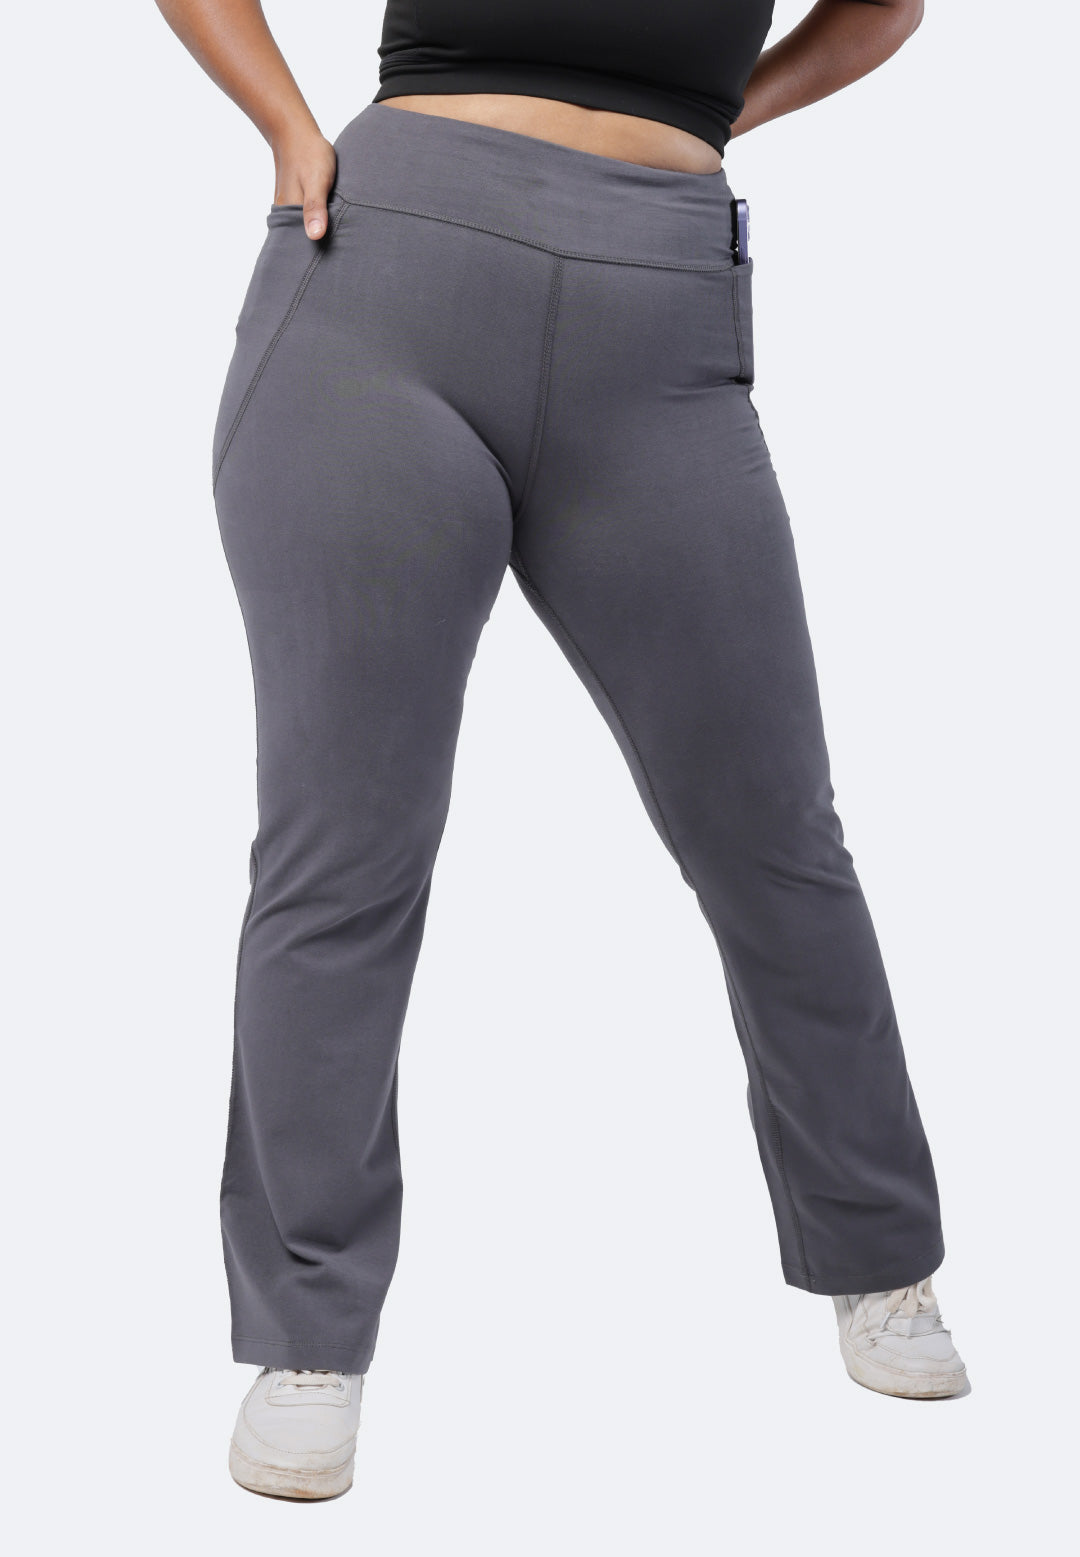 Women's Flare Yoga Pants, Buy Women's Flare Yoga Pant Online Australia